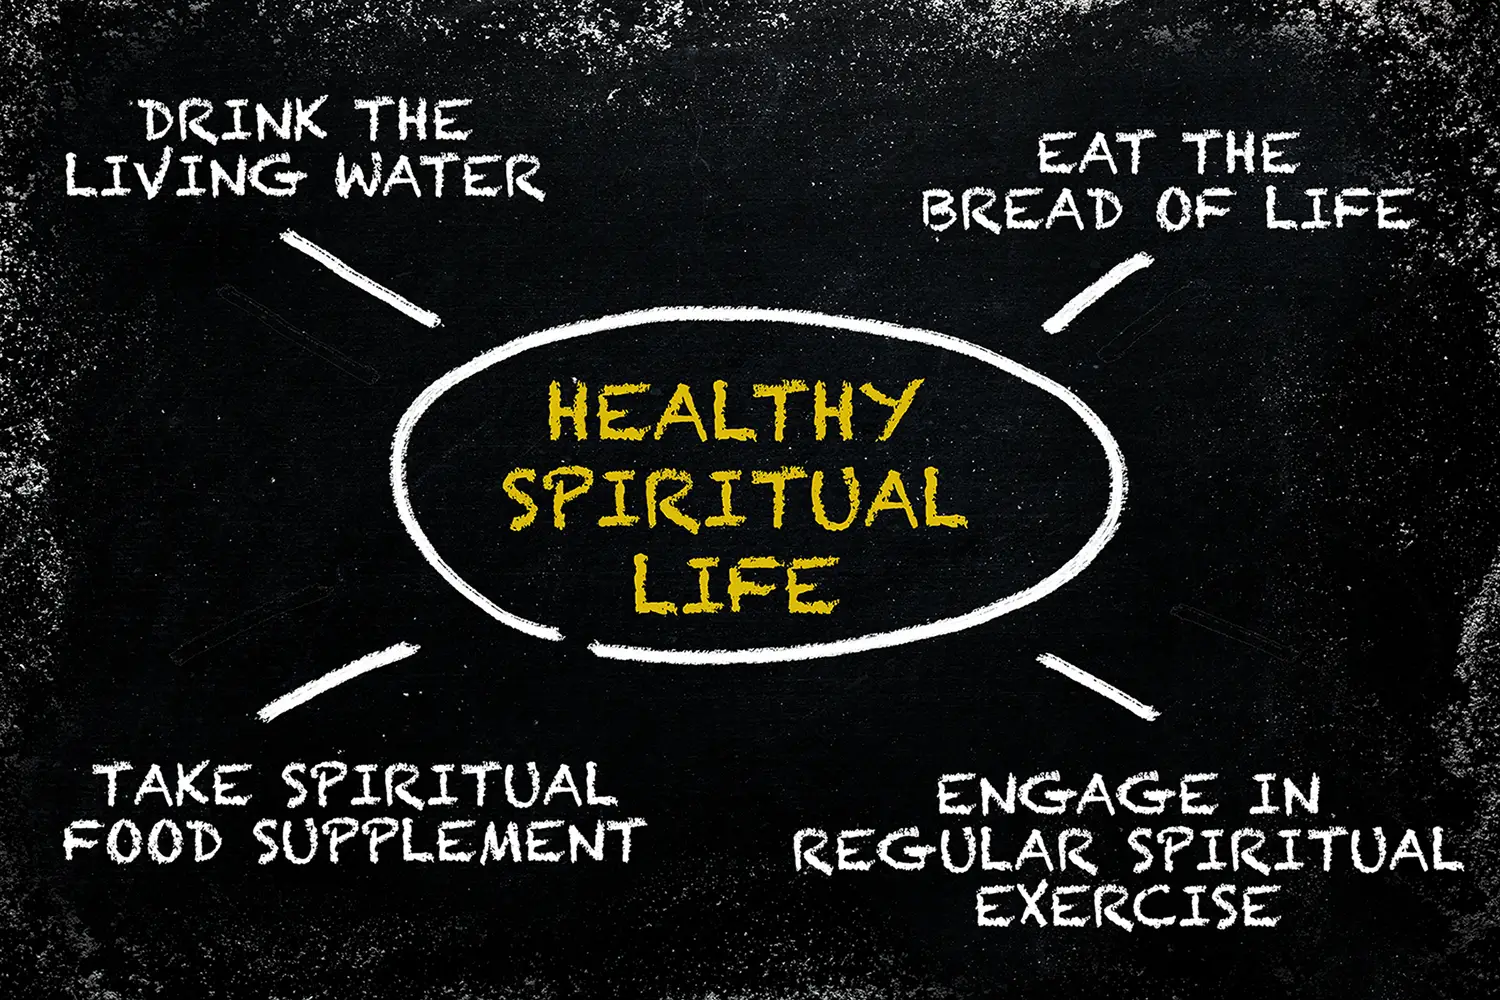 four keys to a Healthy Spiritual Life